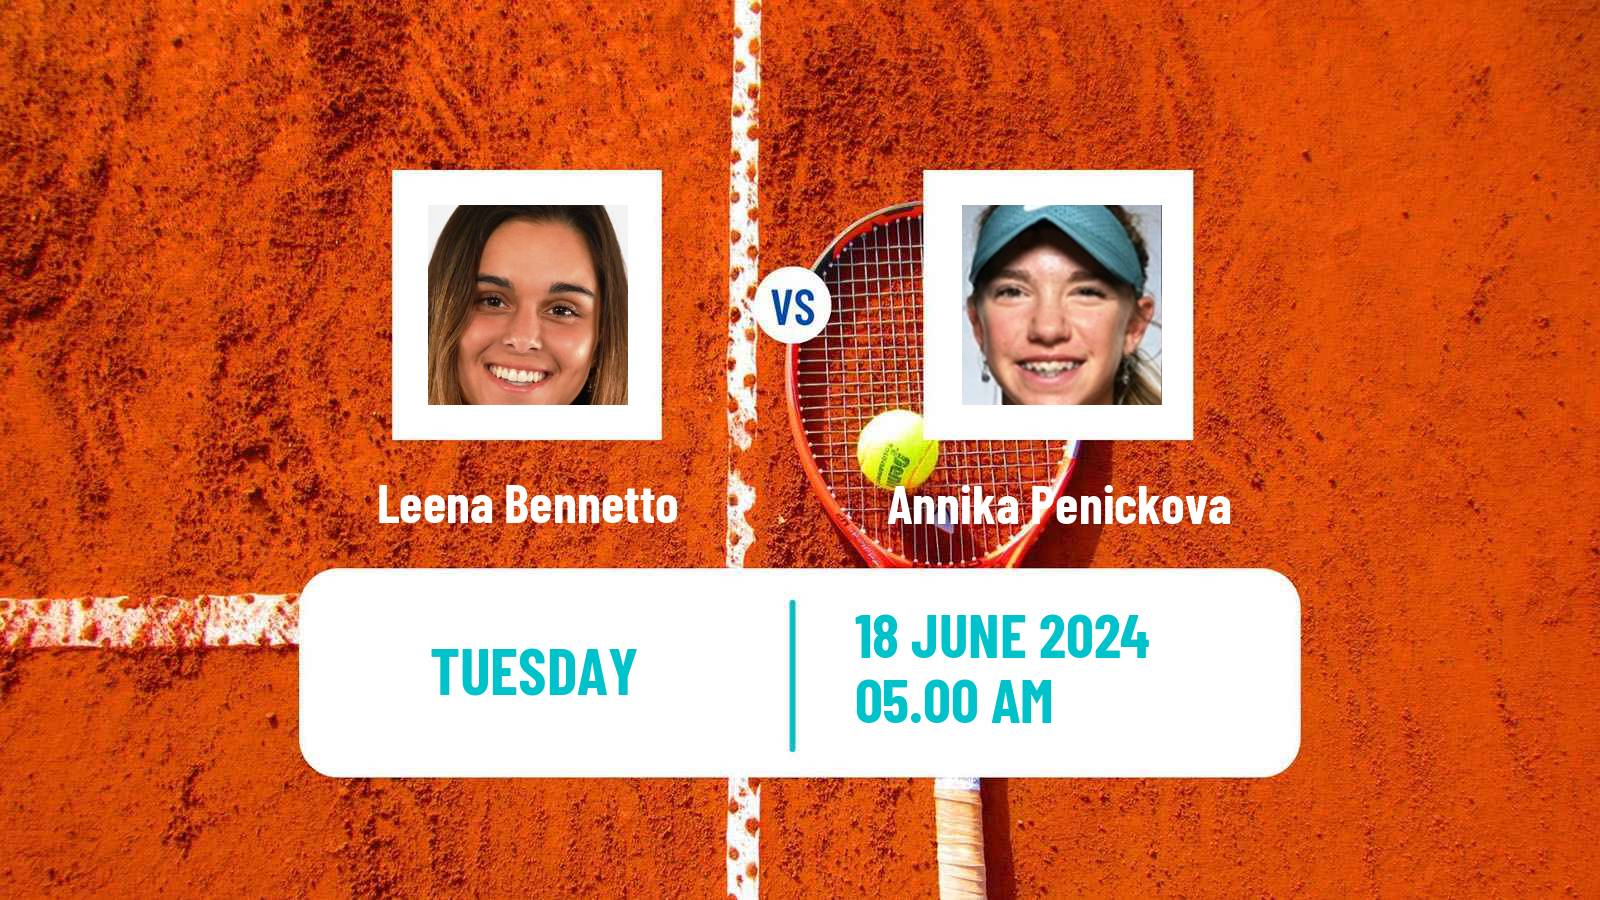 Tennis ITF W15 Monastir 23 Women Leena Bennetto - Annika Penickova